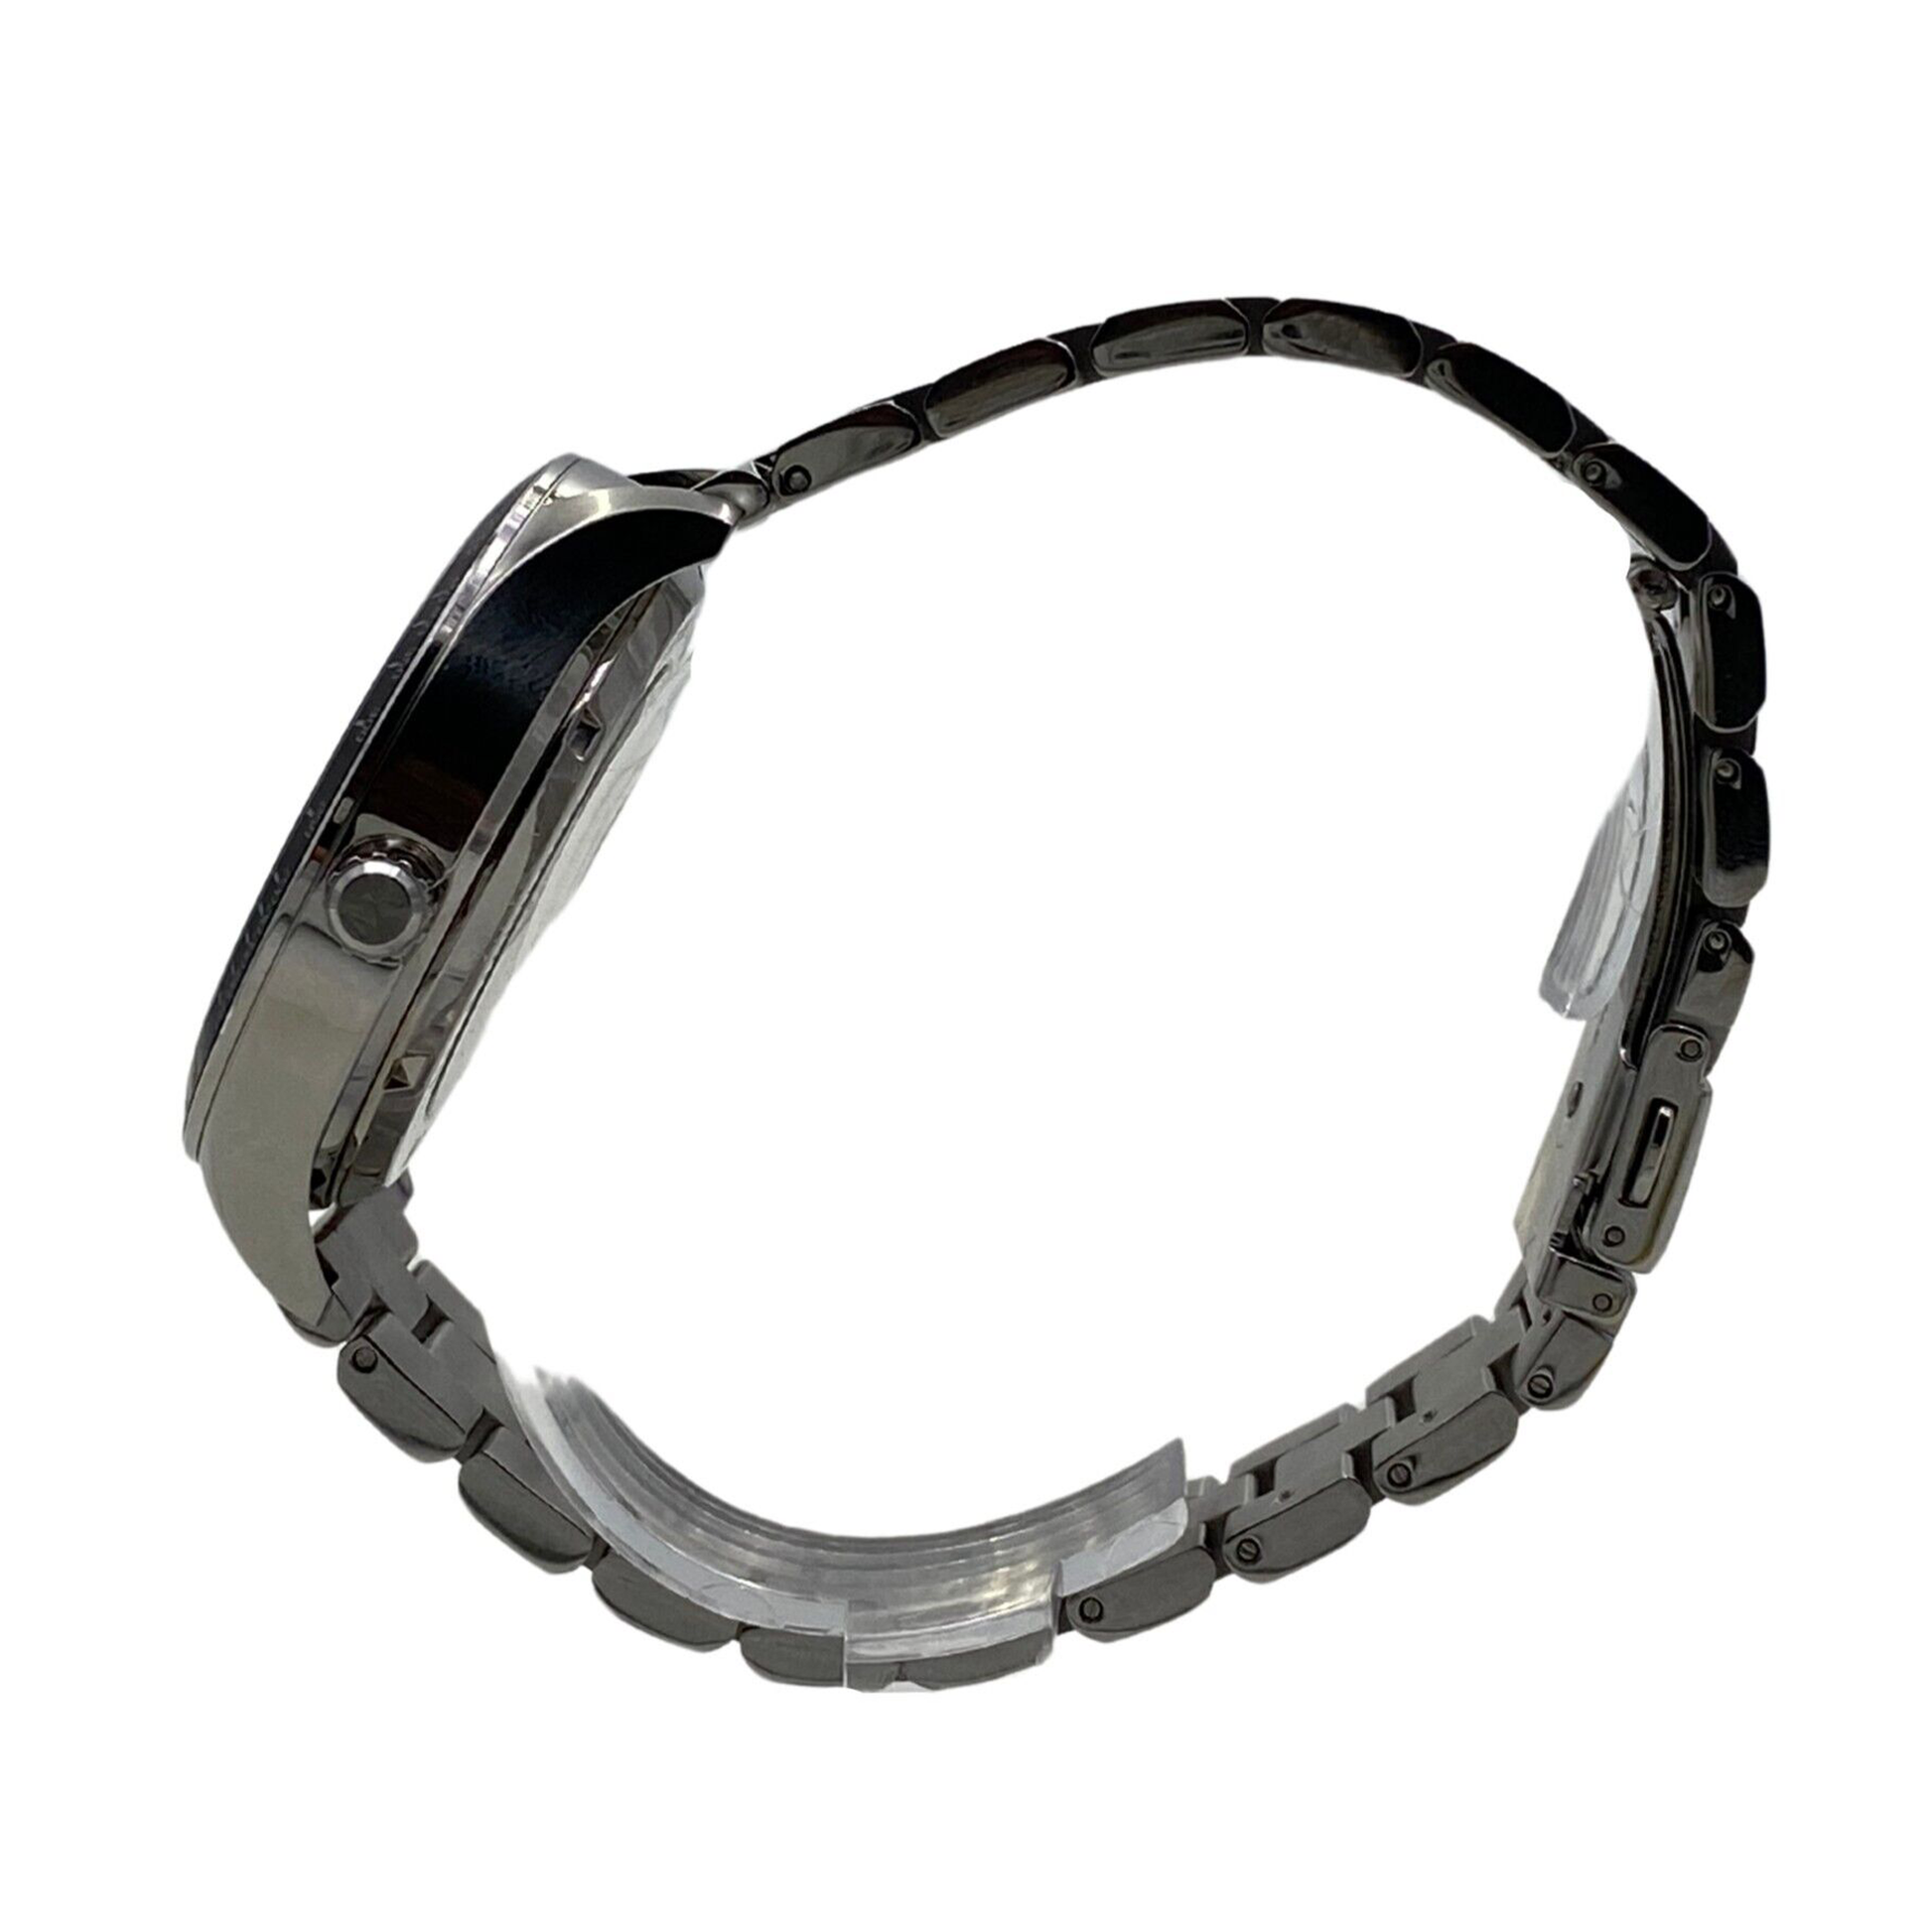 Michael Kors Men's Automatic Merrick Stainless Steel Bracelet Watch - MK9037 - 796483399617 